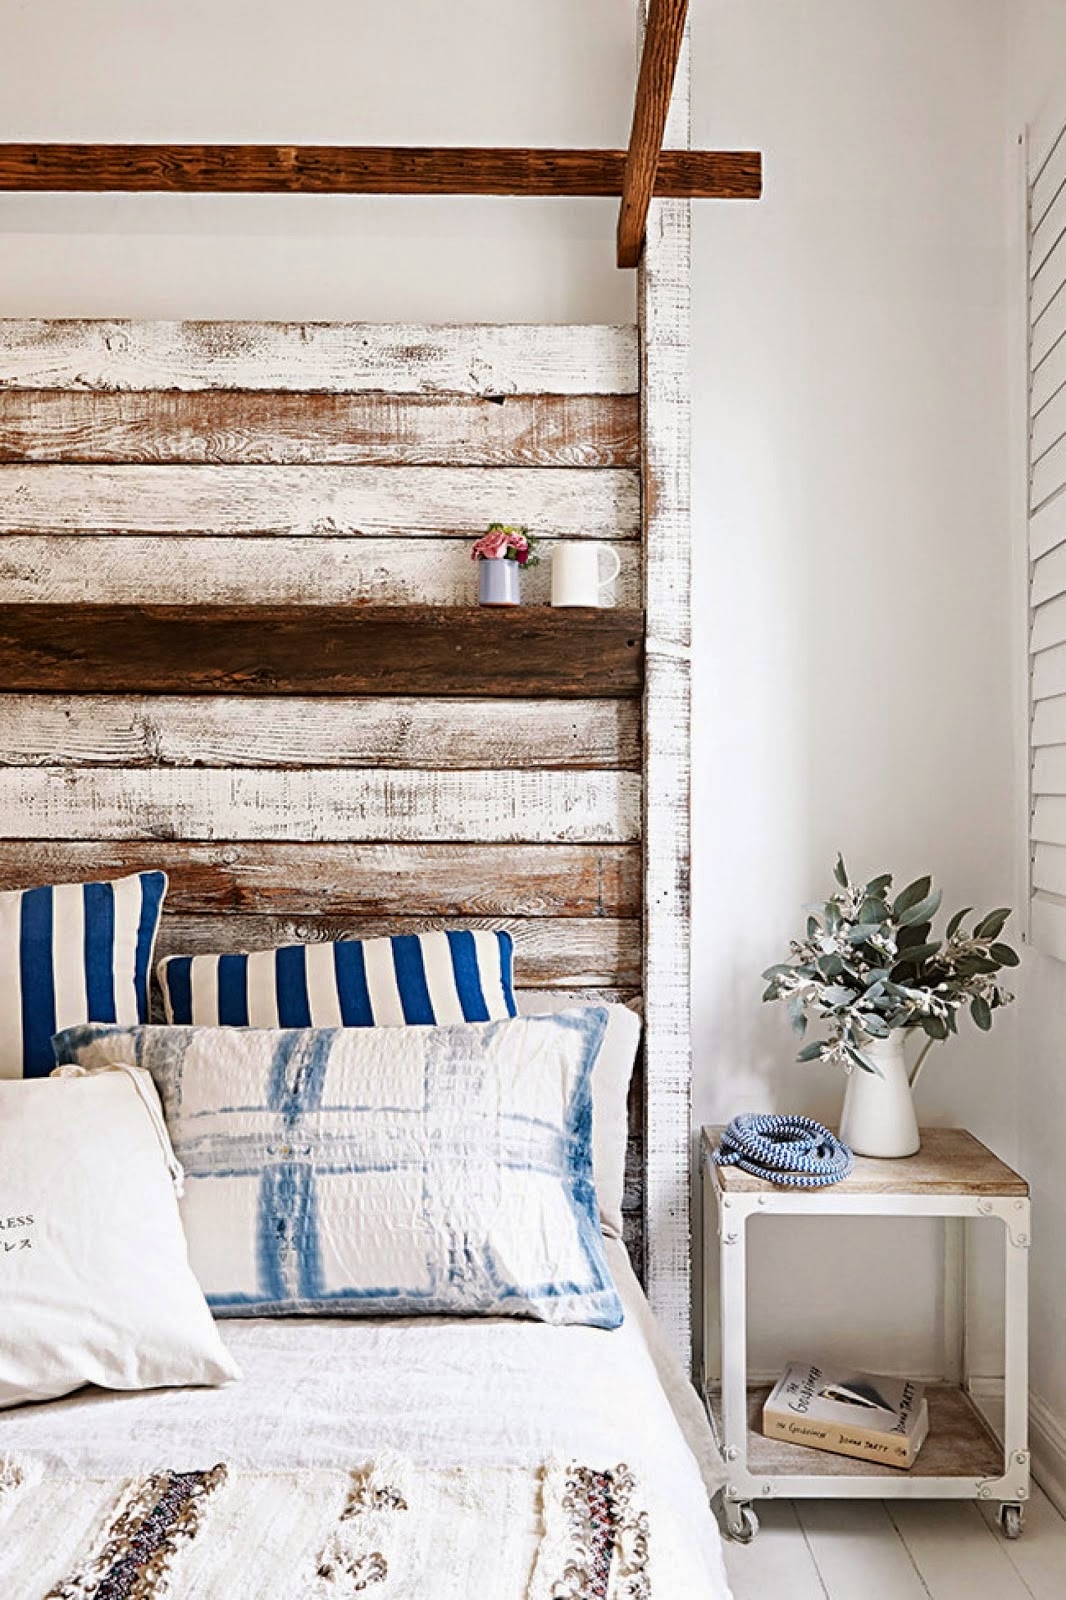 Rustic bedroom with salvaged wood headboard